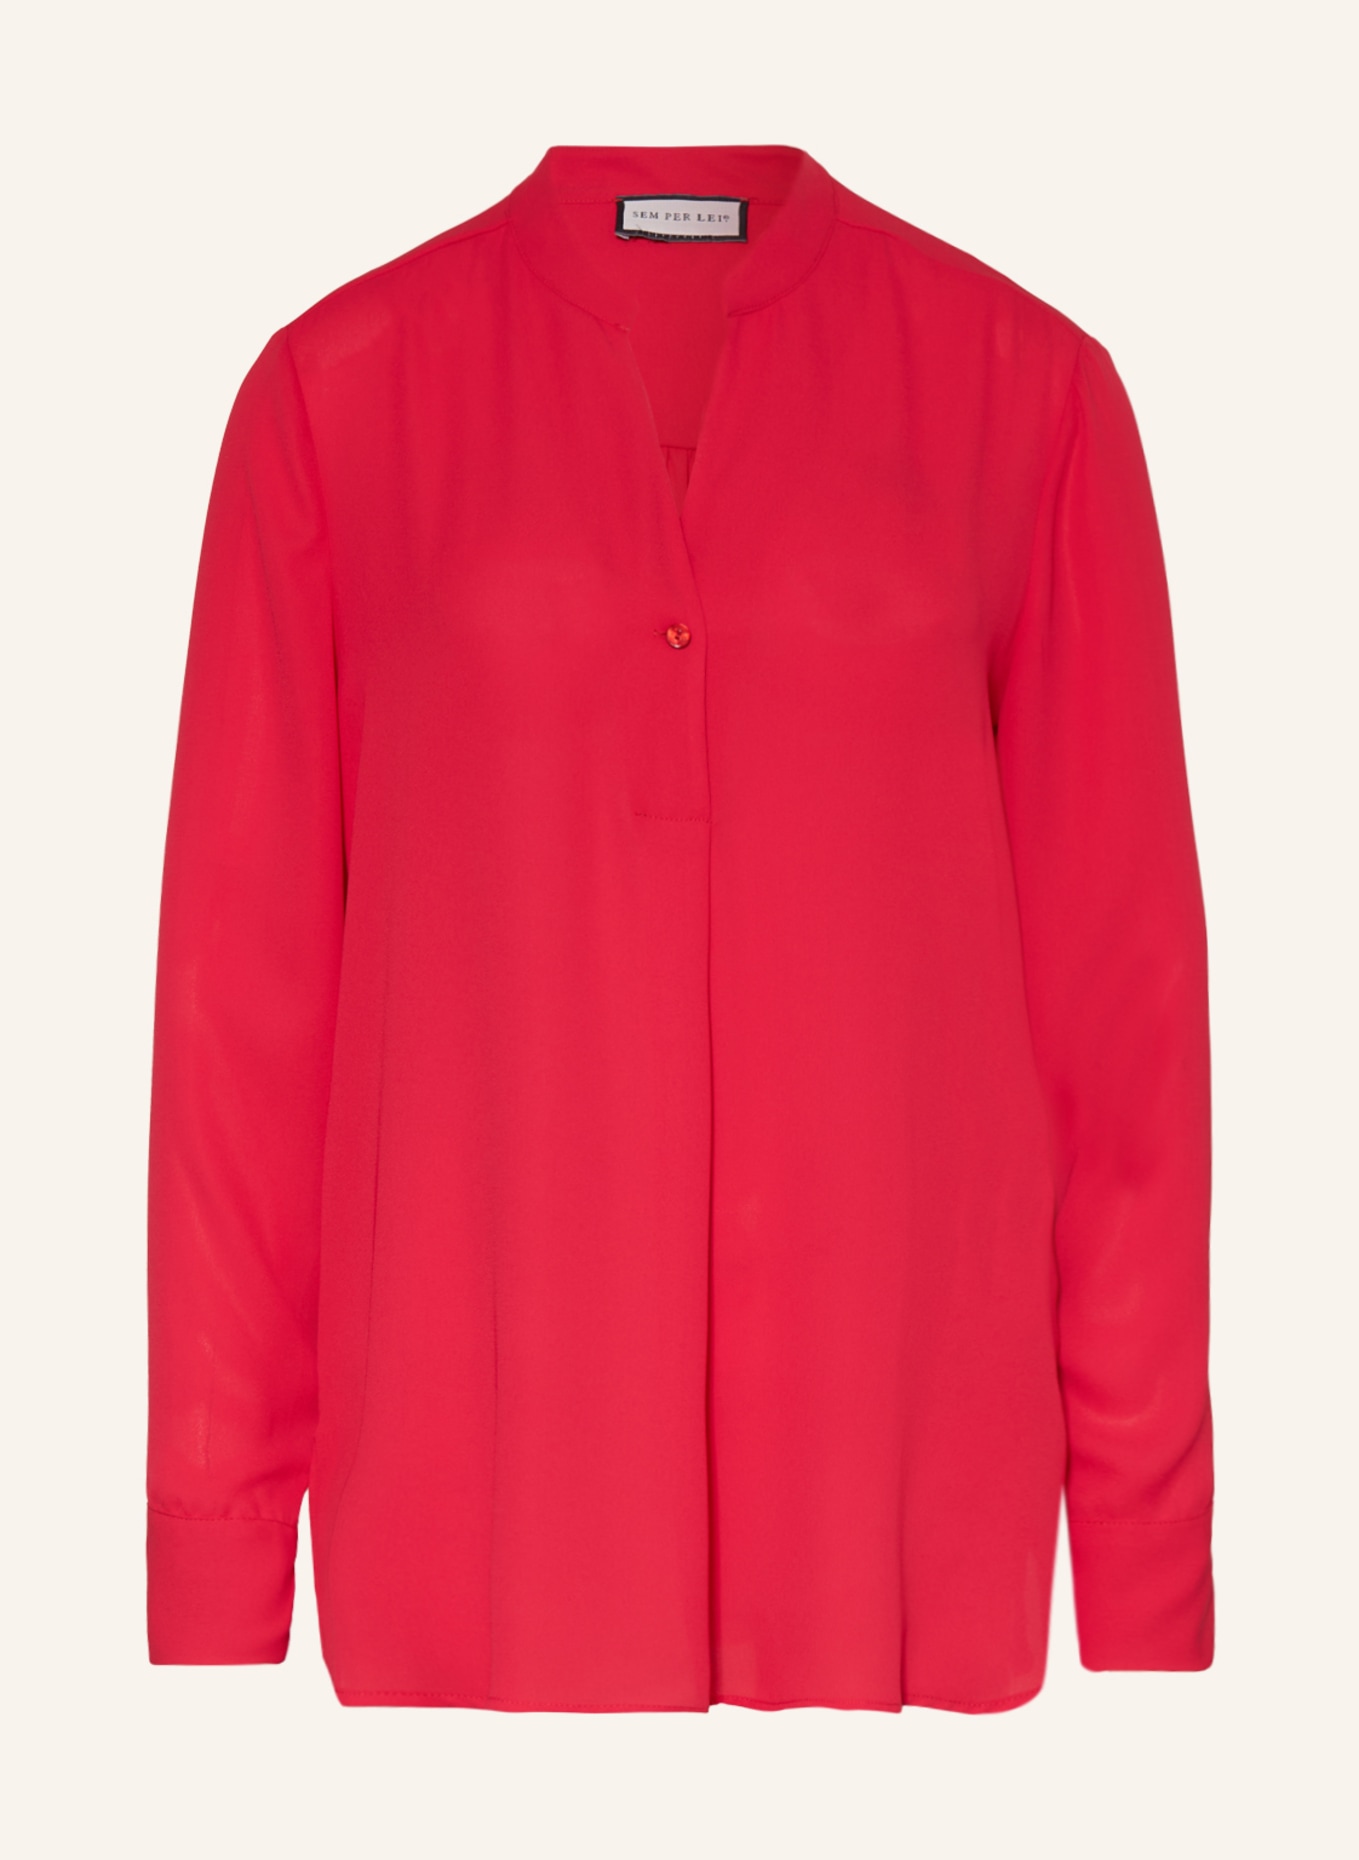 SEM PER LEI Shirt blouse, Color: FUCHSIA (Image 1)